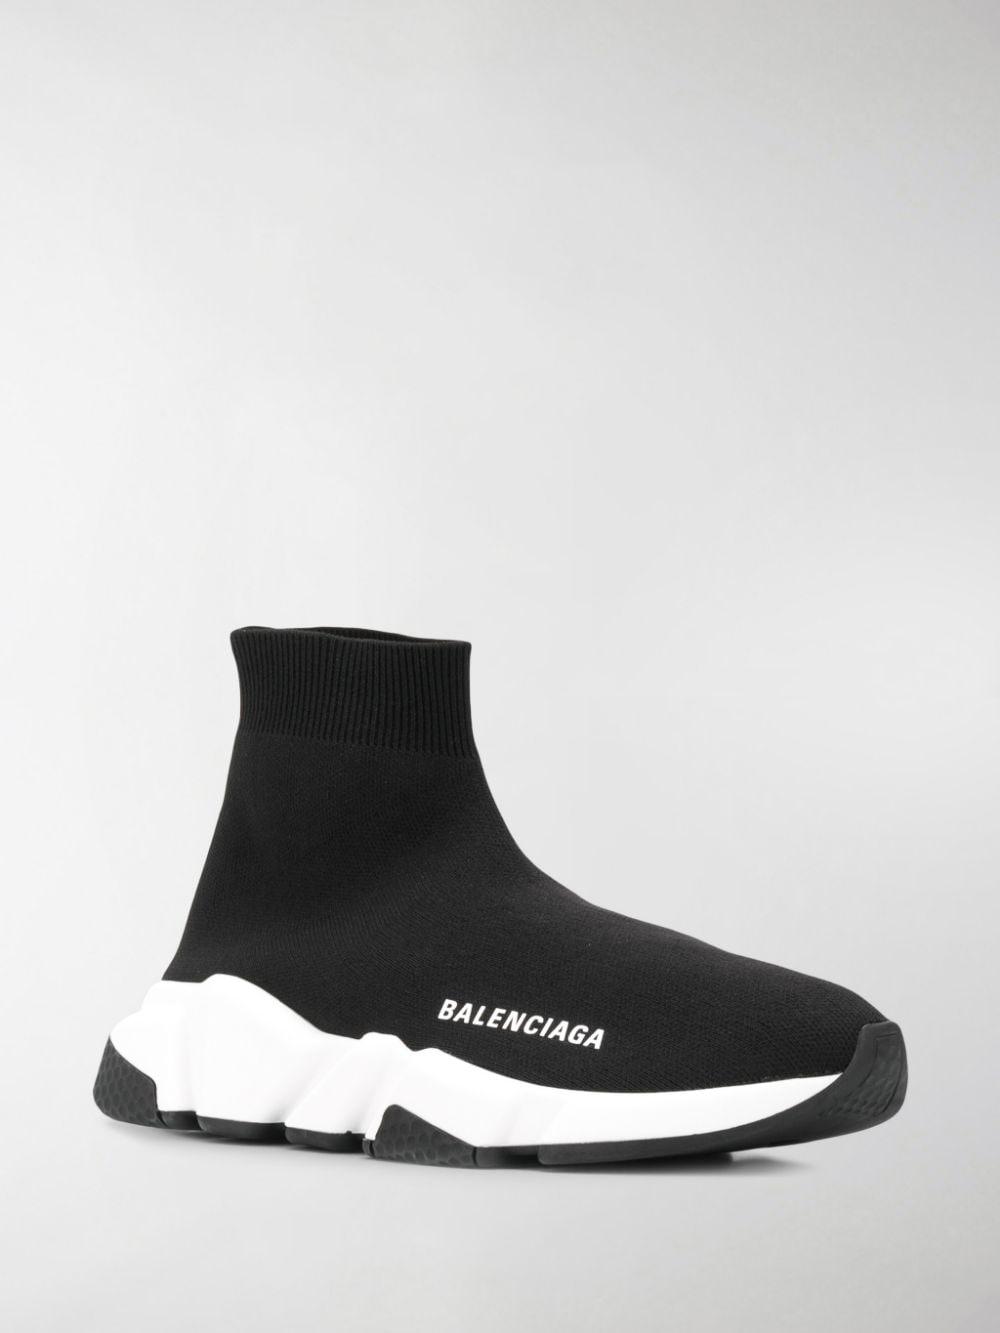 Balenciaga Speed Slip-on Sneakers in Black - Lyst